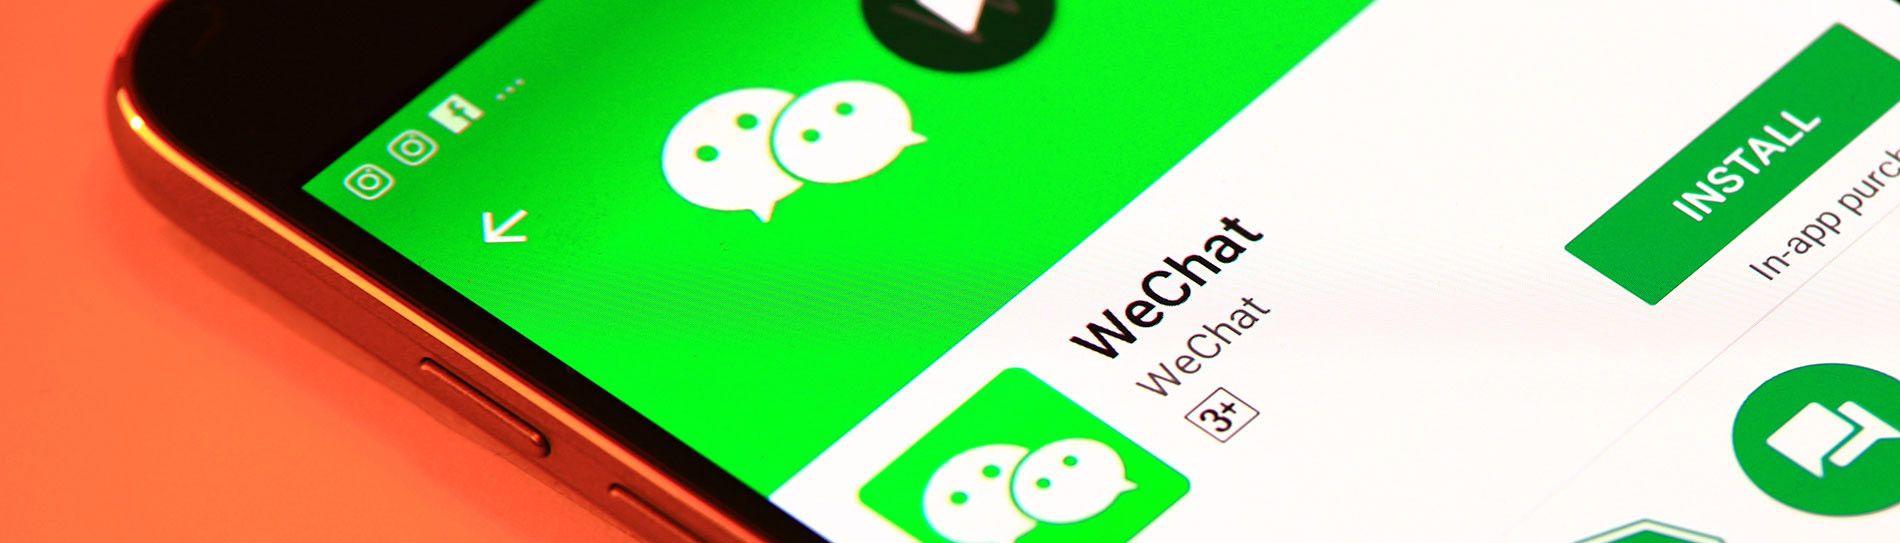 Weixin Logo - Weixin”: the Chinese version of WhatsApp